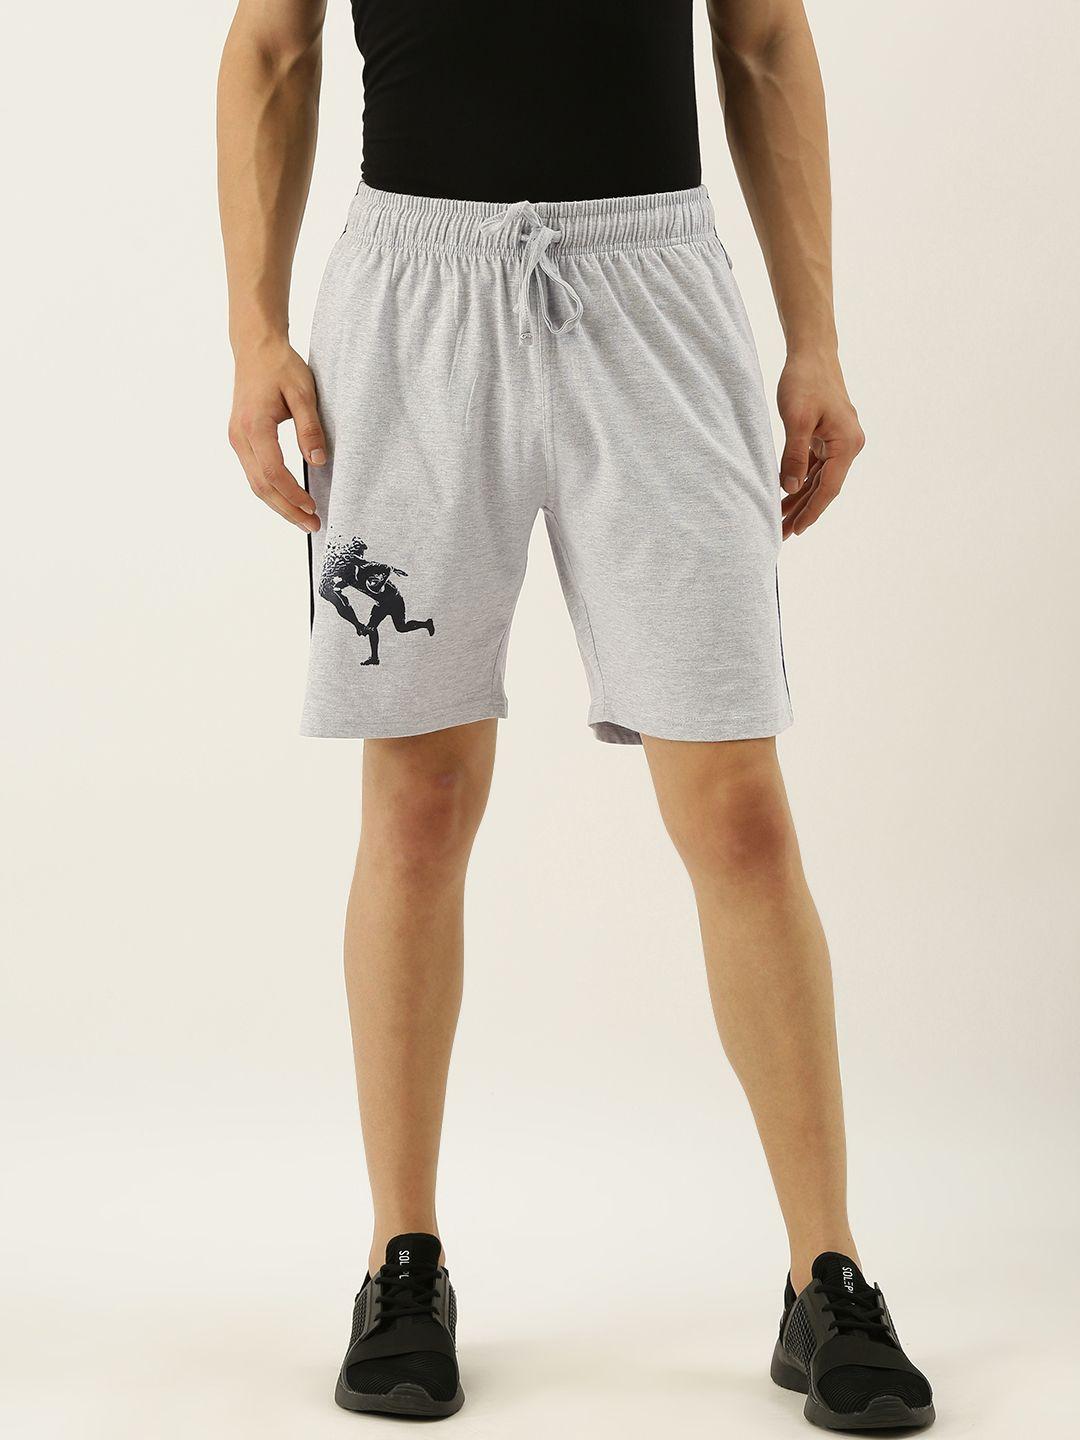 urban-dog-men-grey-printed-regular-fit-regular-shorts